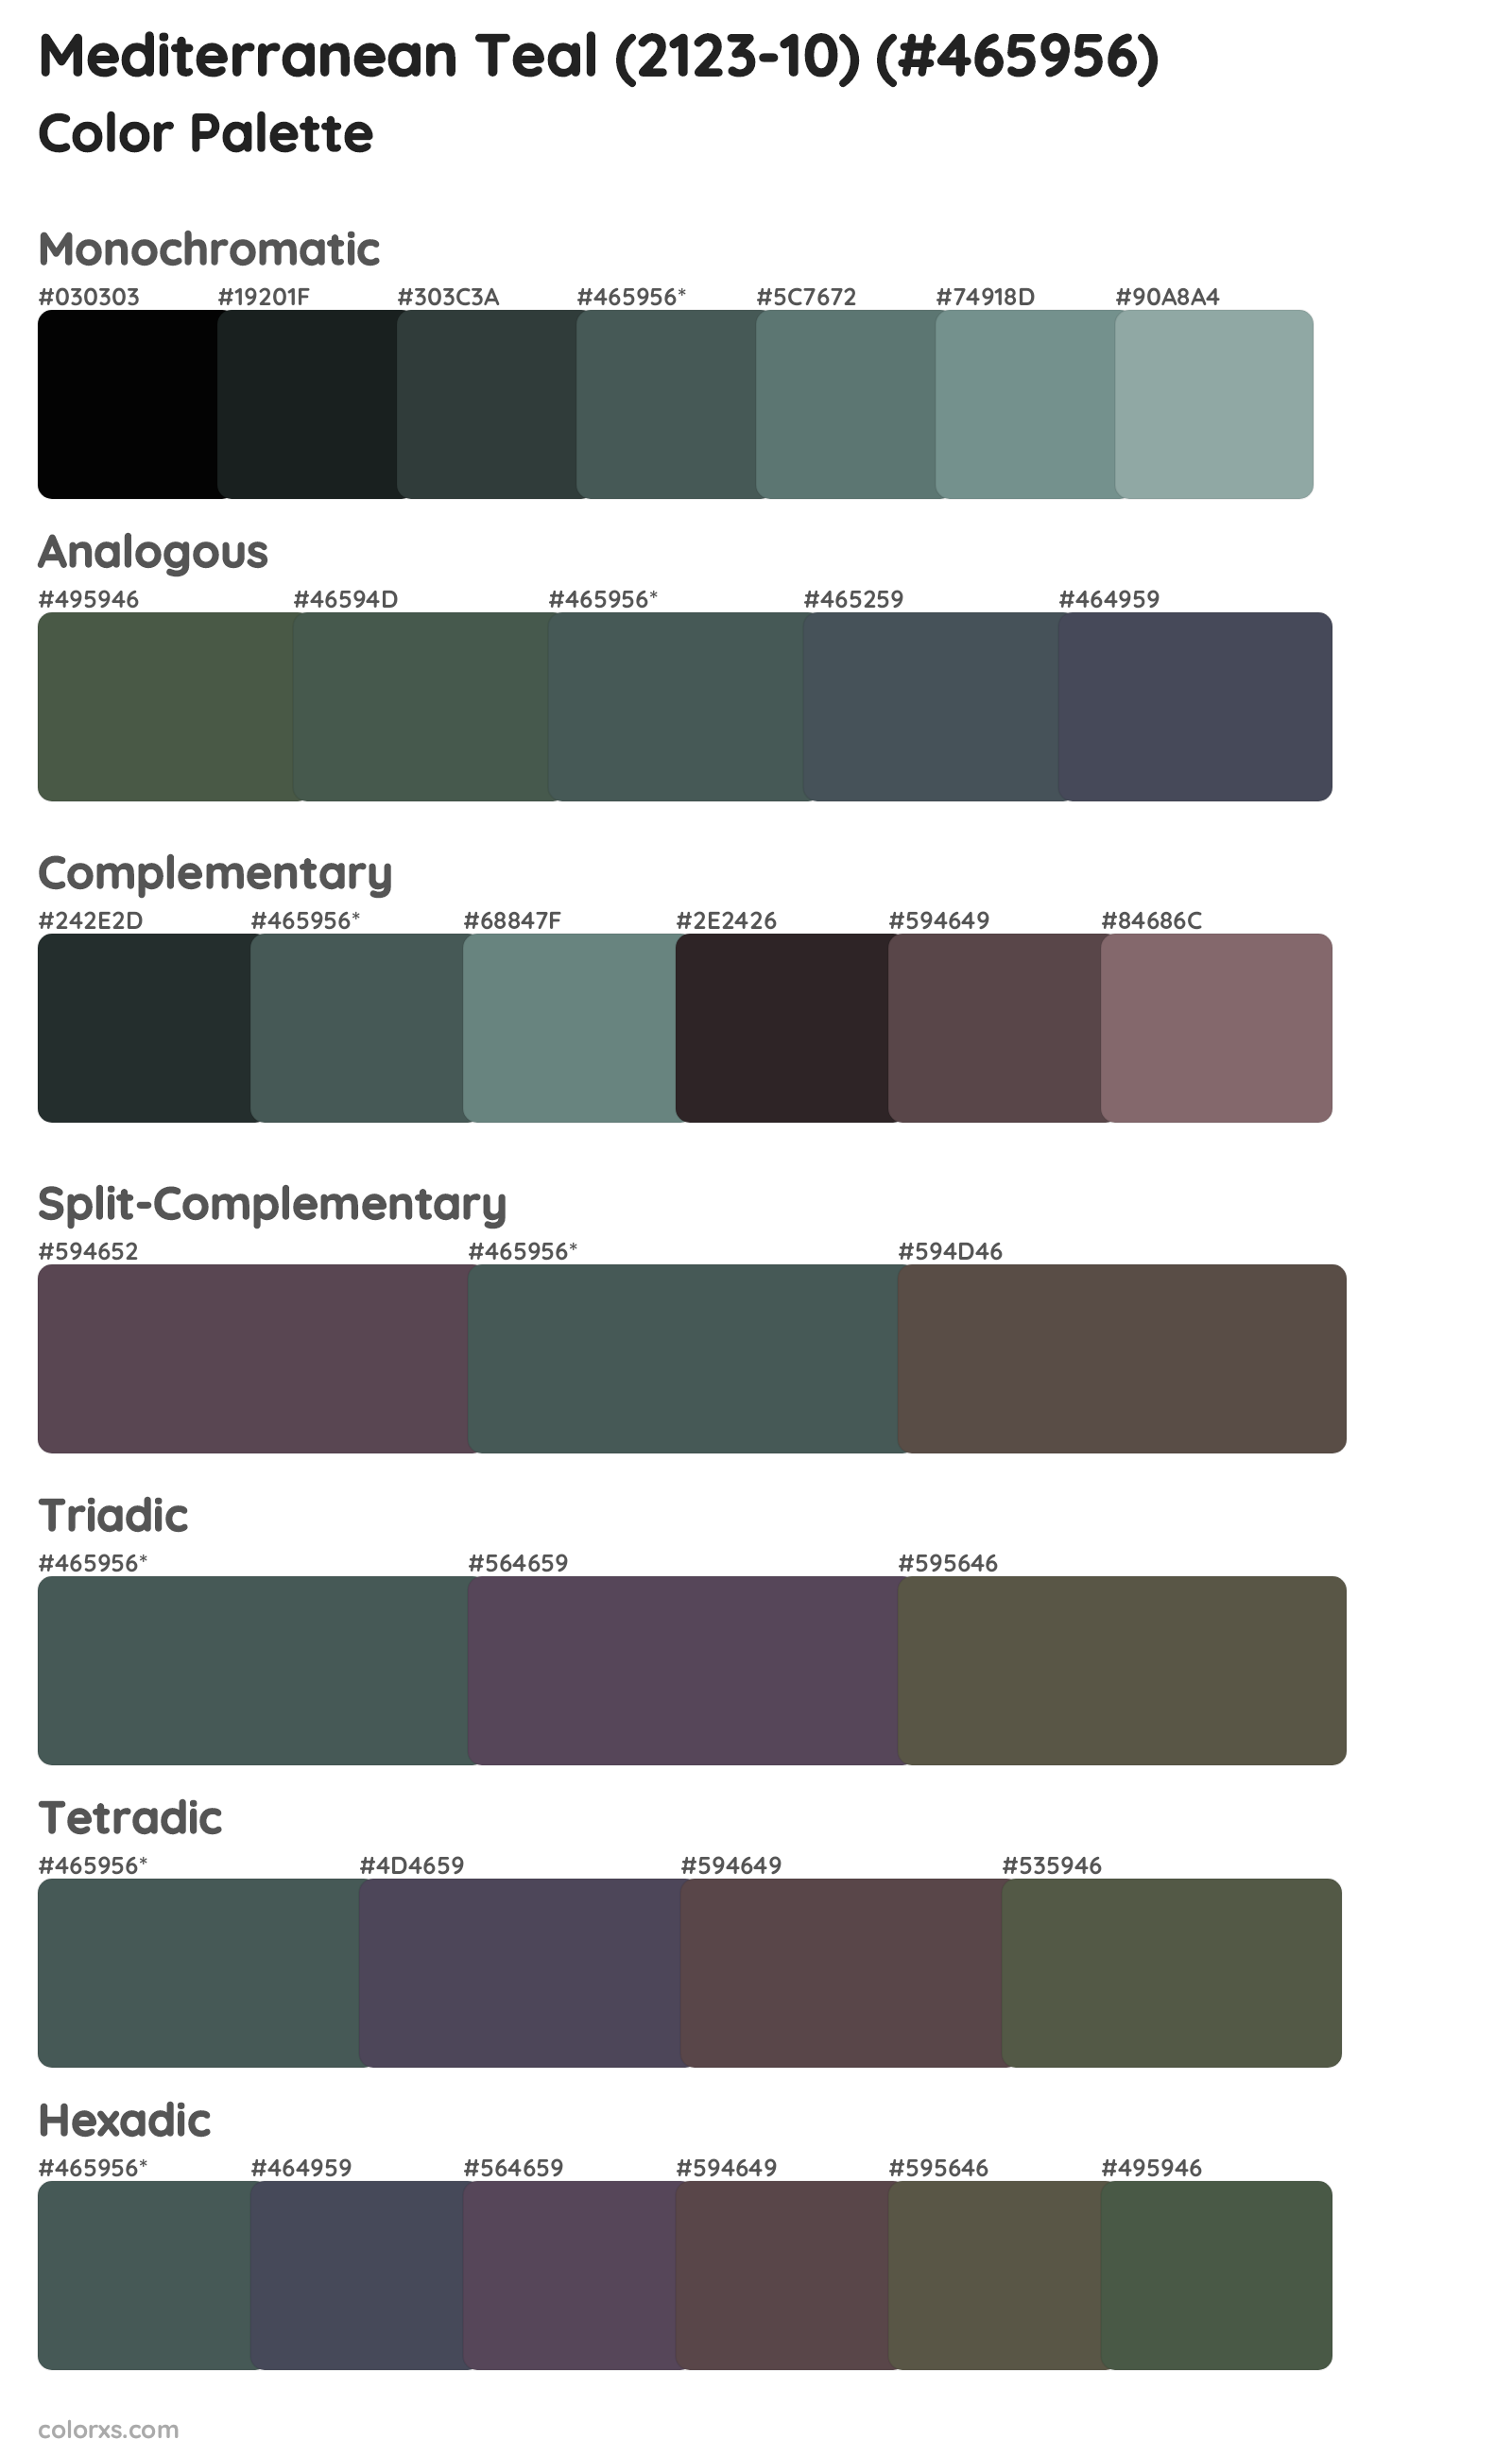 Mediterranean Teal (2123-10) Color Scheme Palettes